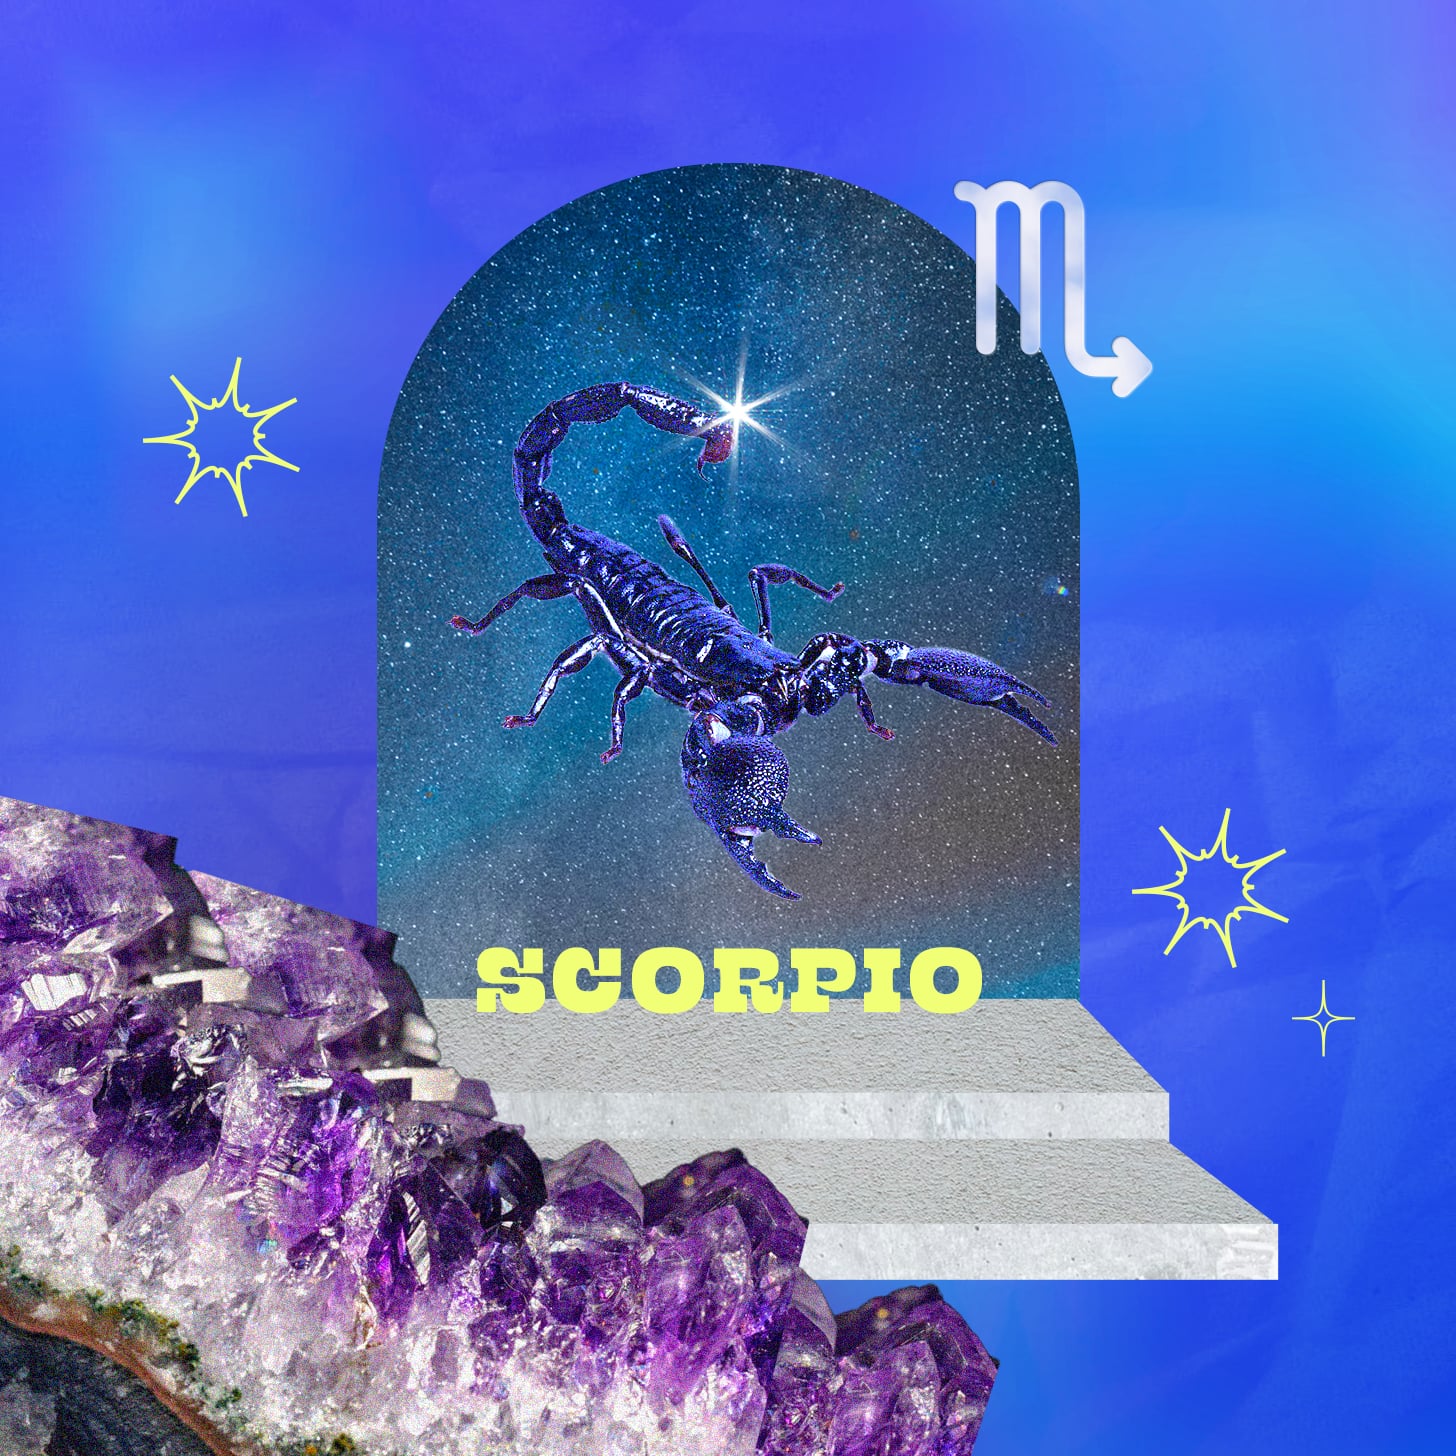 Scorpio weekly horoscope for Dec. 25, 2022